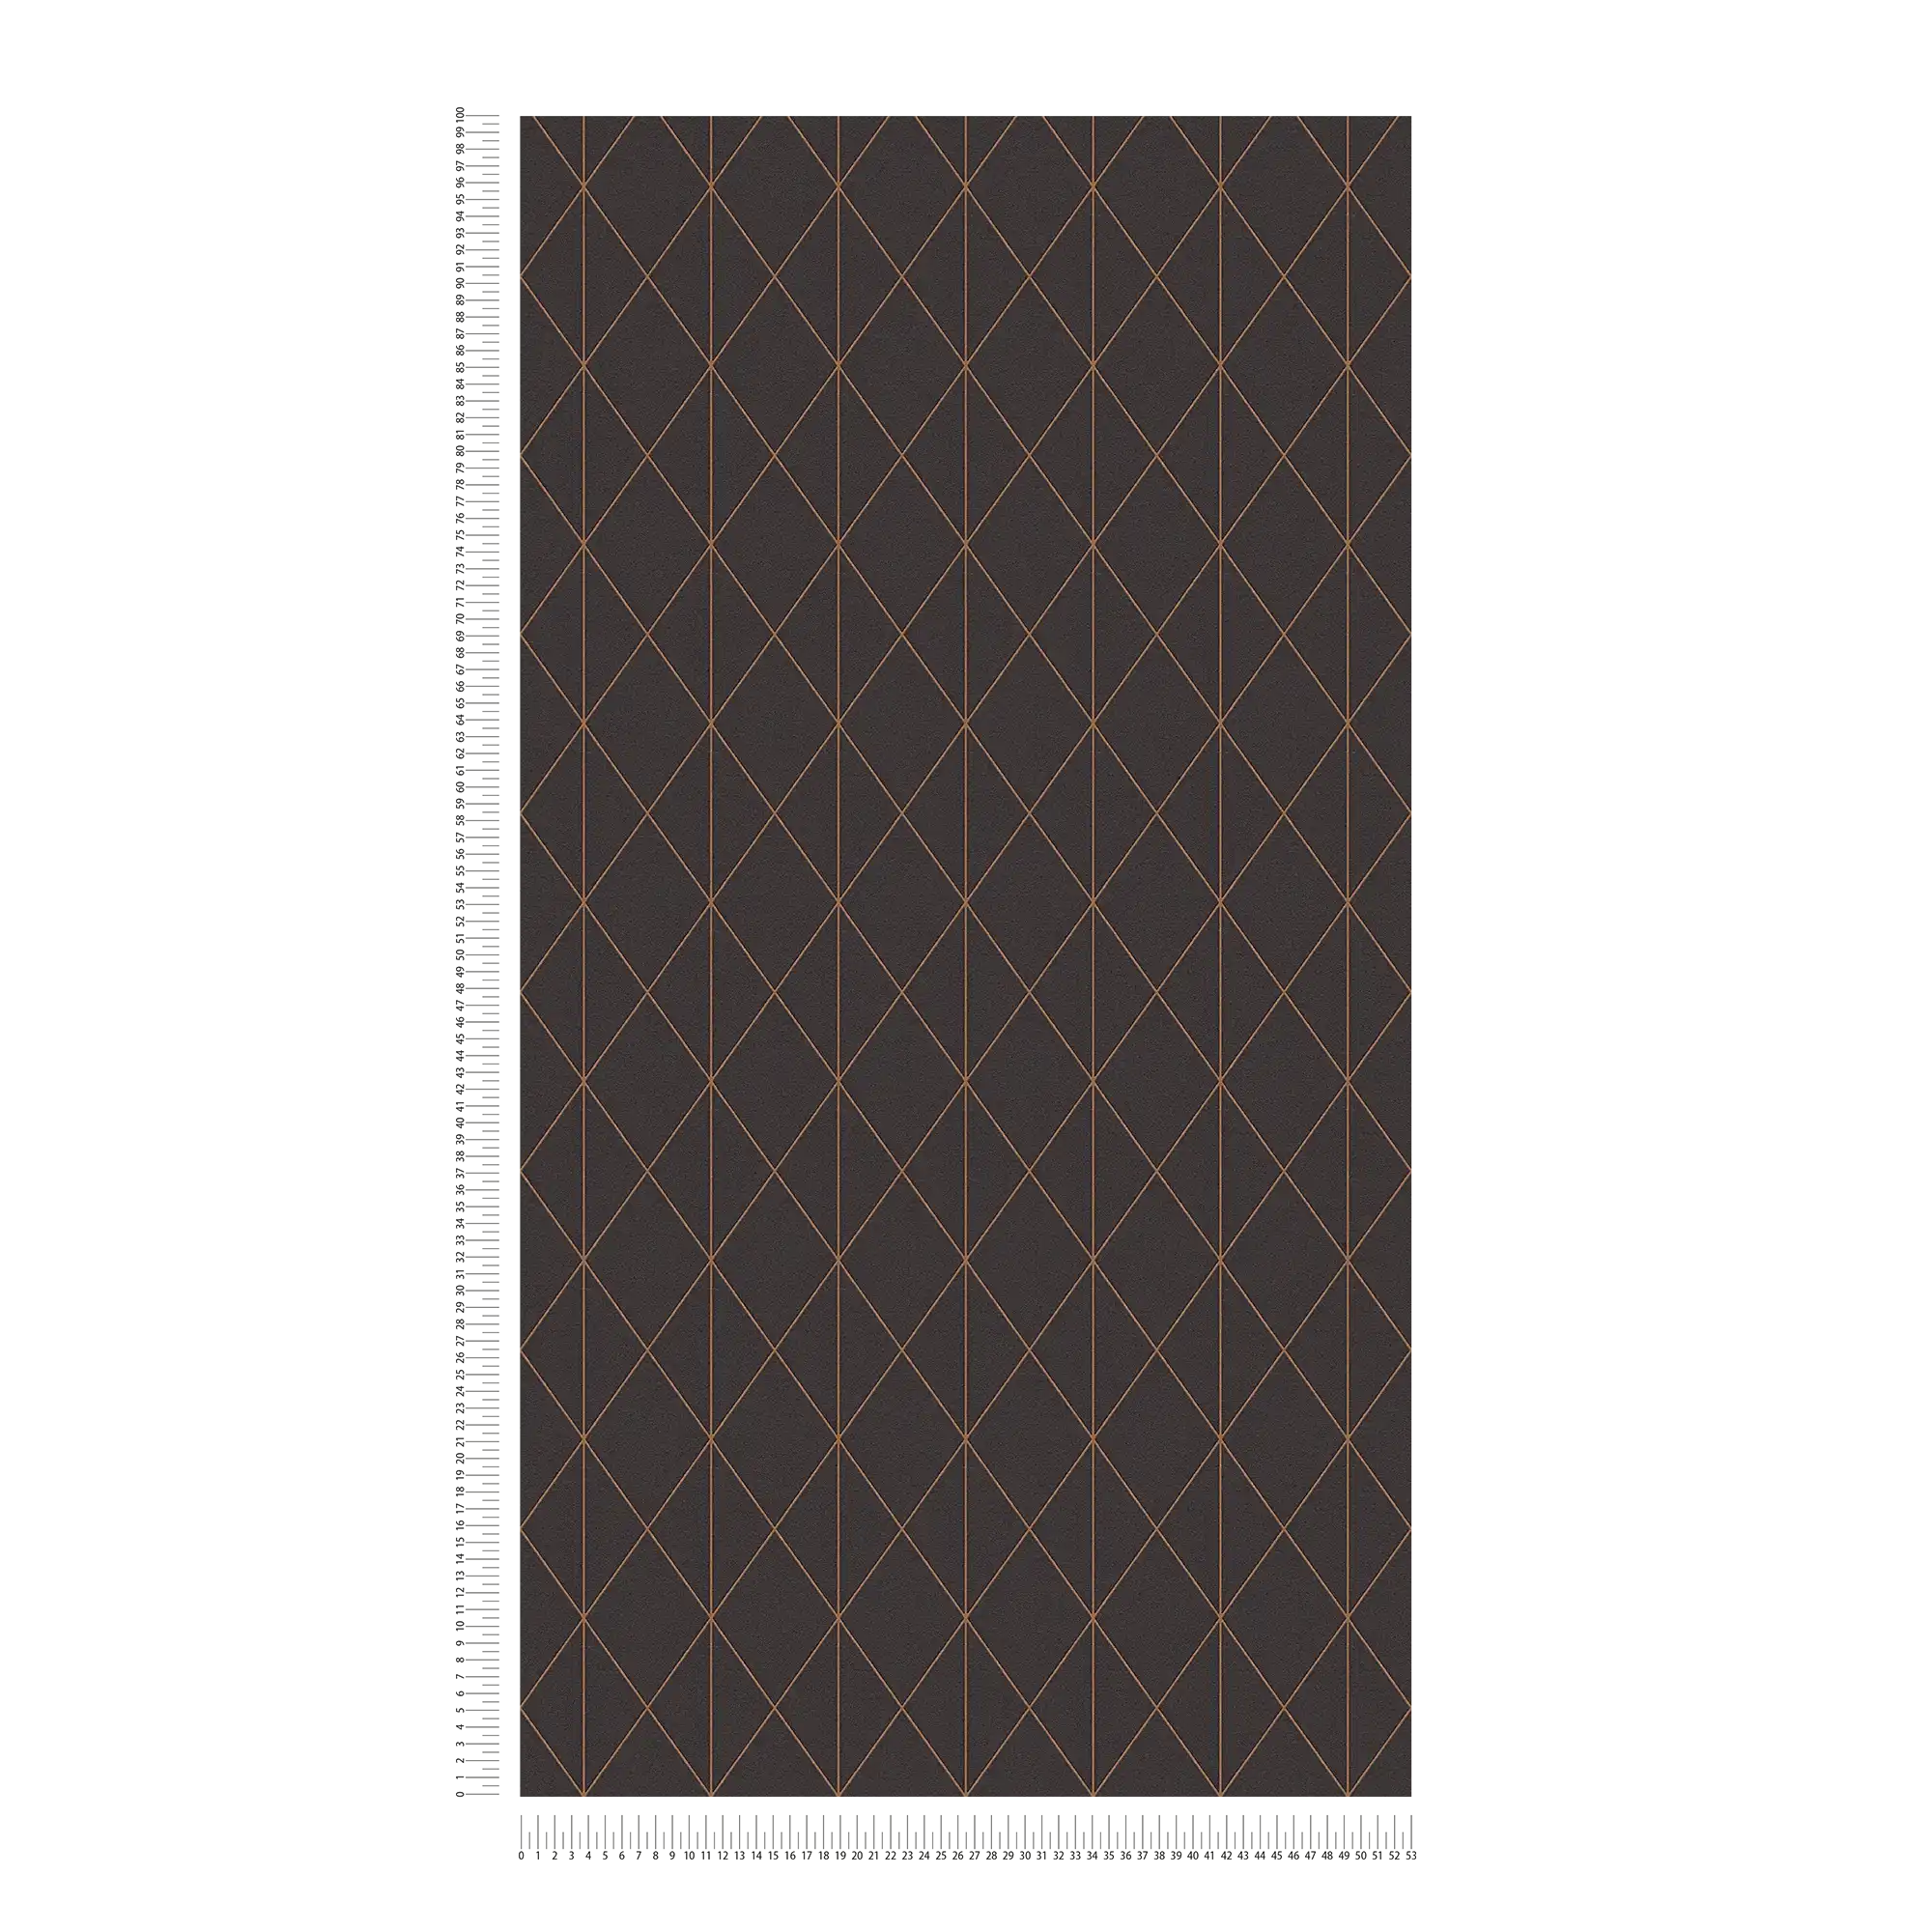             Black non-woven wallpaper with golden line pattern - black
        